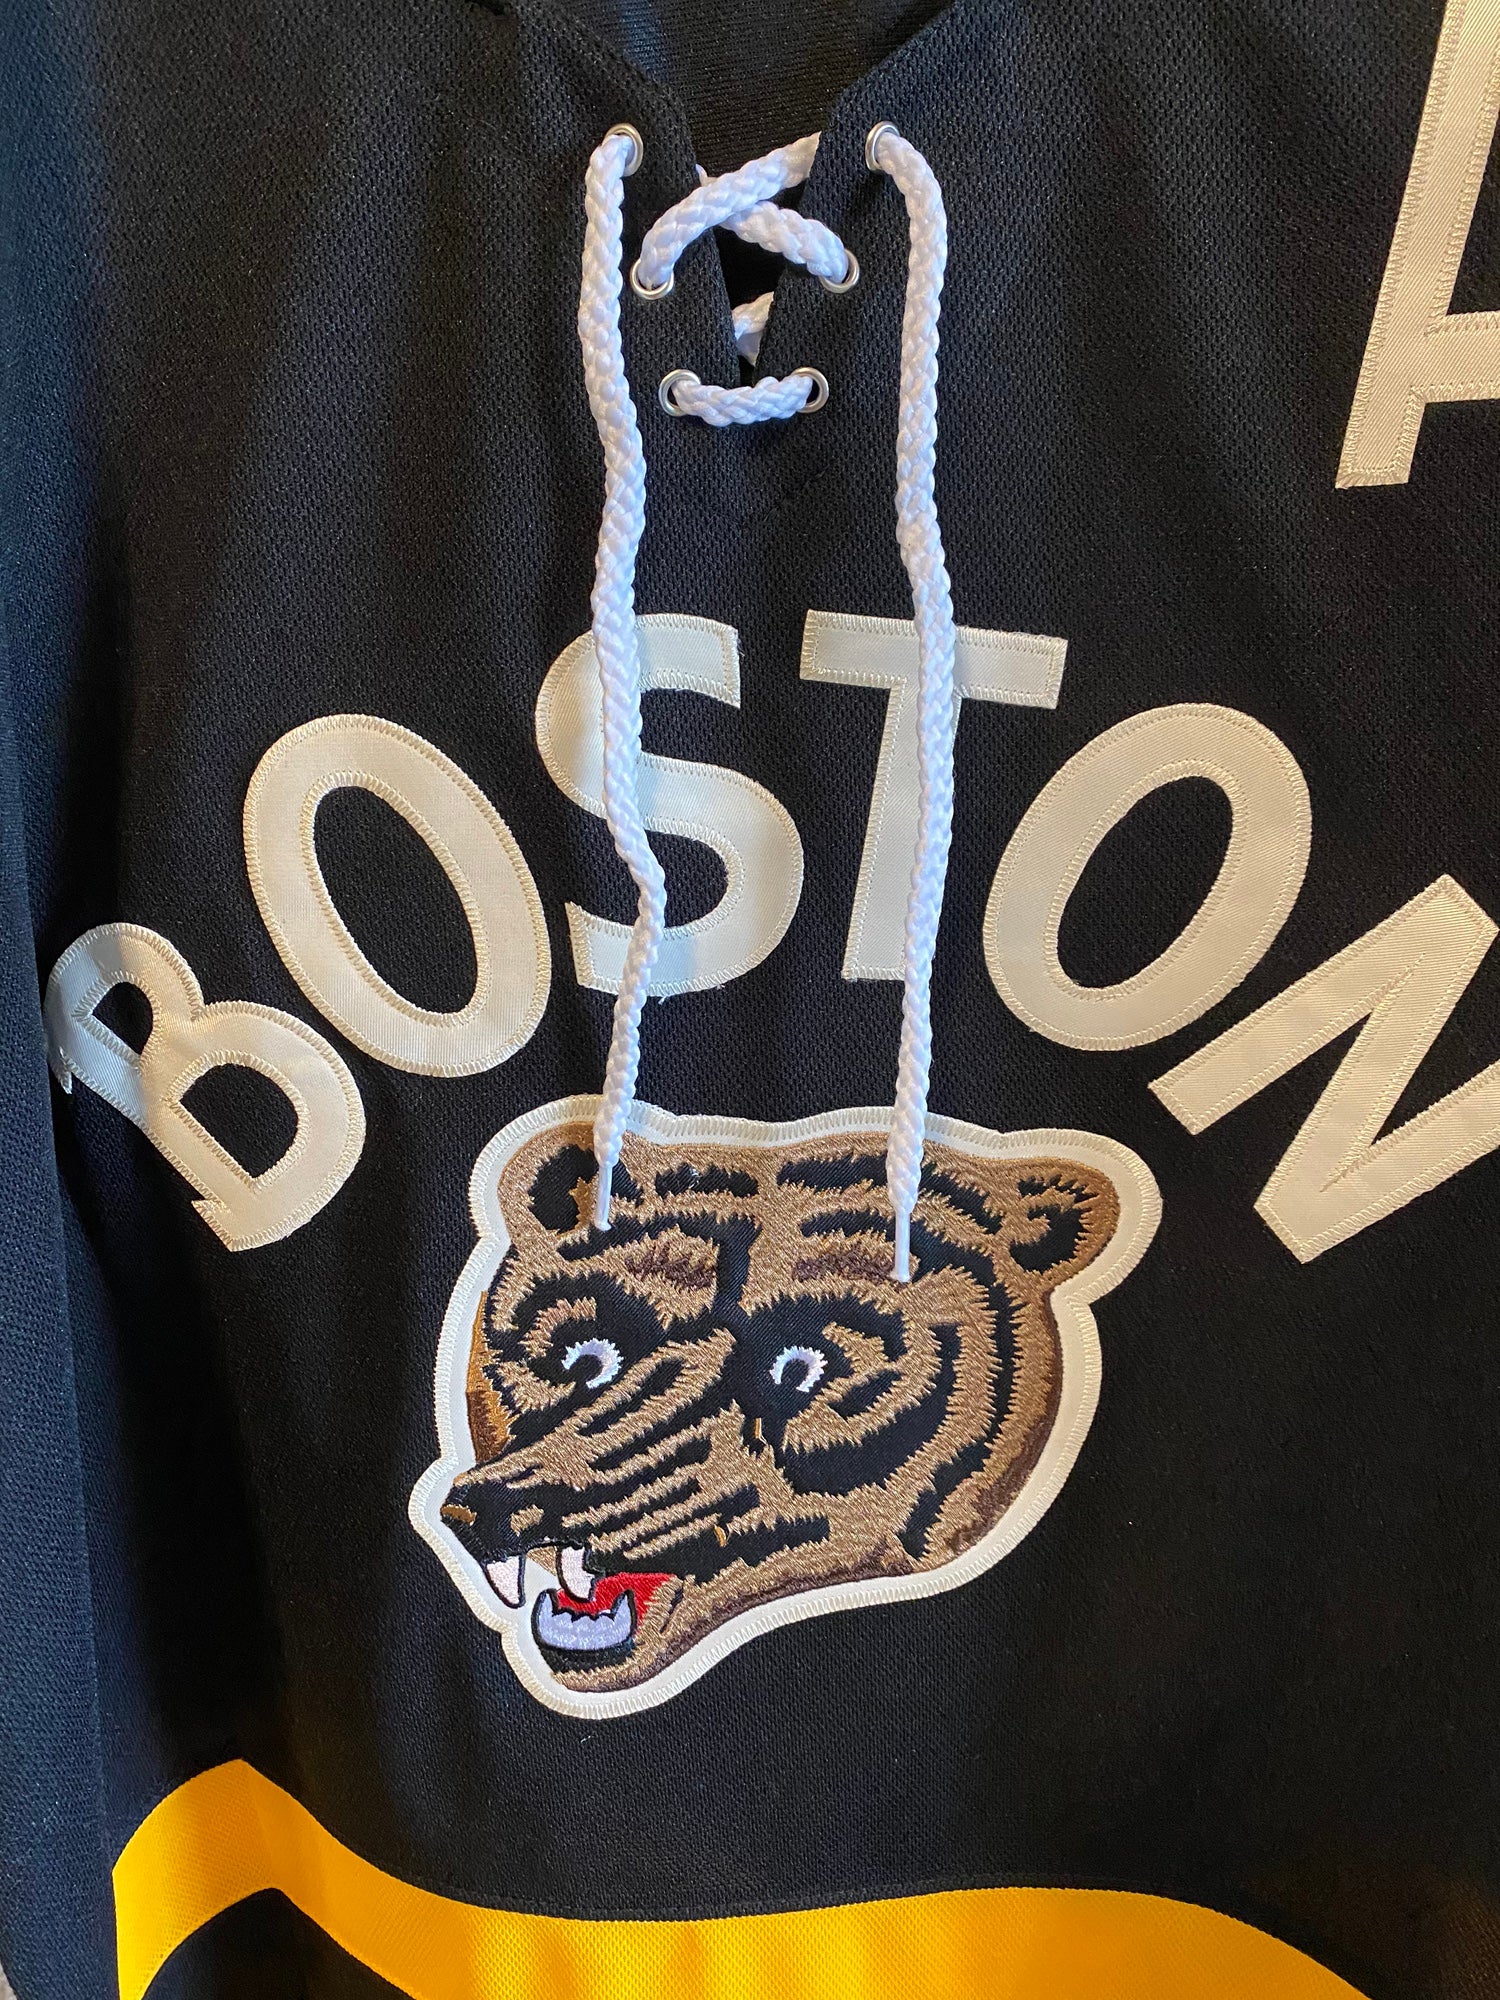 NEW* Pastrnak Winter Classic 2023 Boston Bruins NHL Jersey Size XL 54